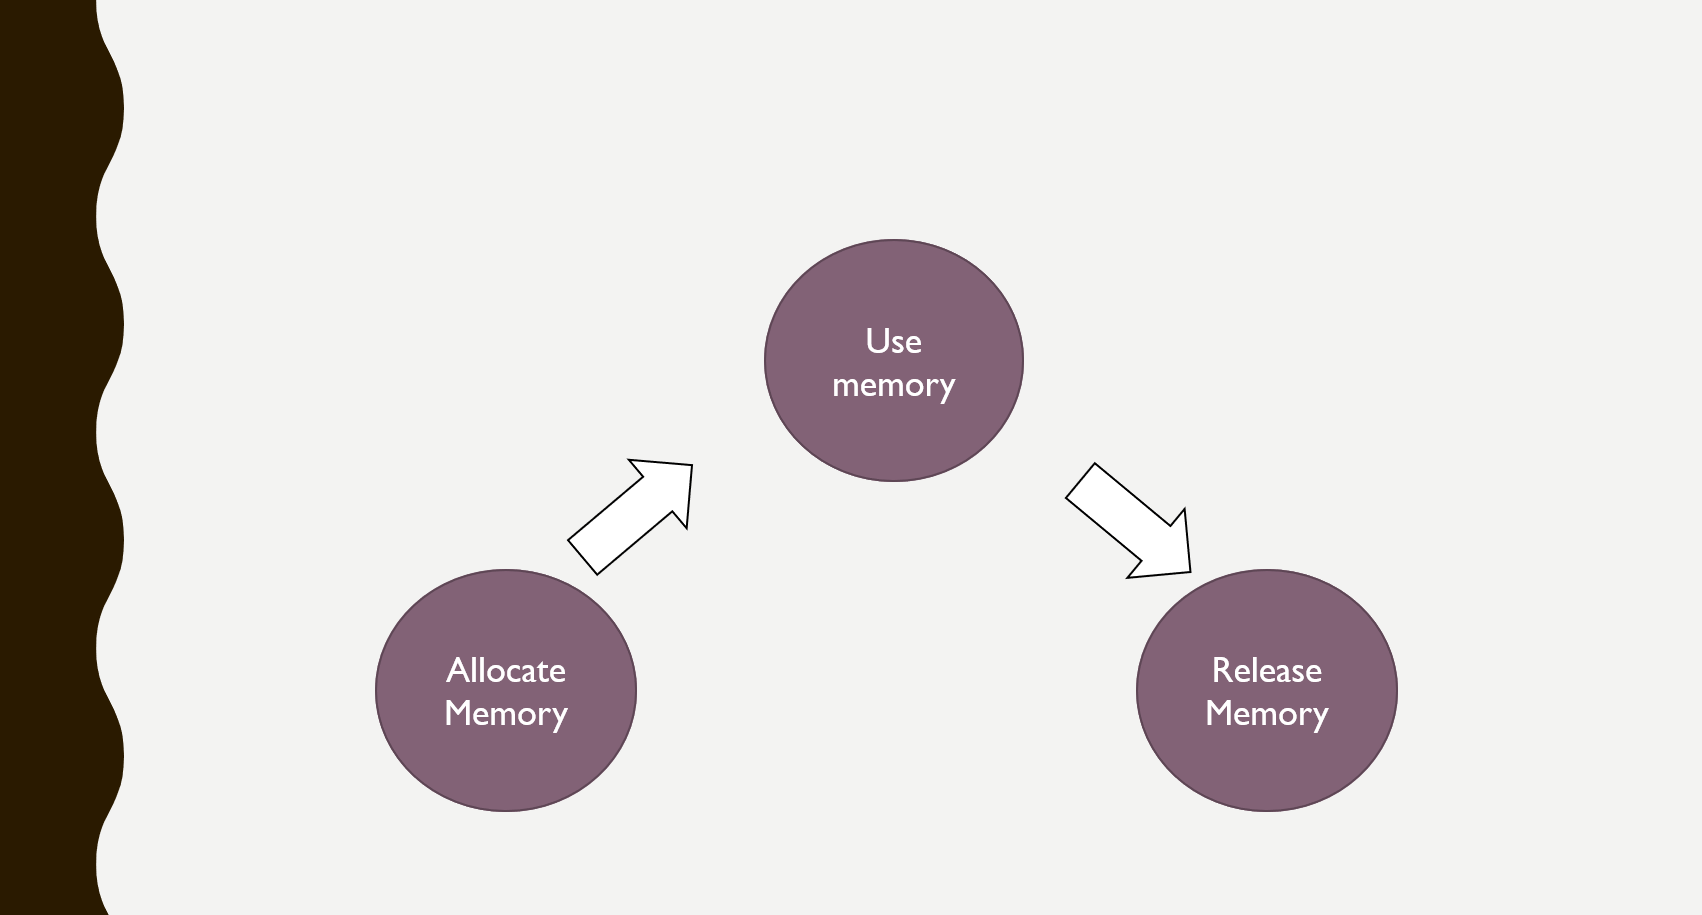 Memory life-cycle image